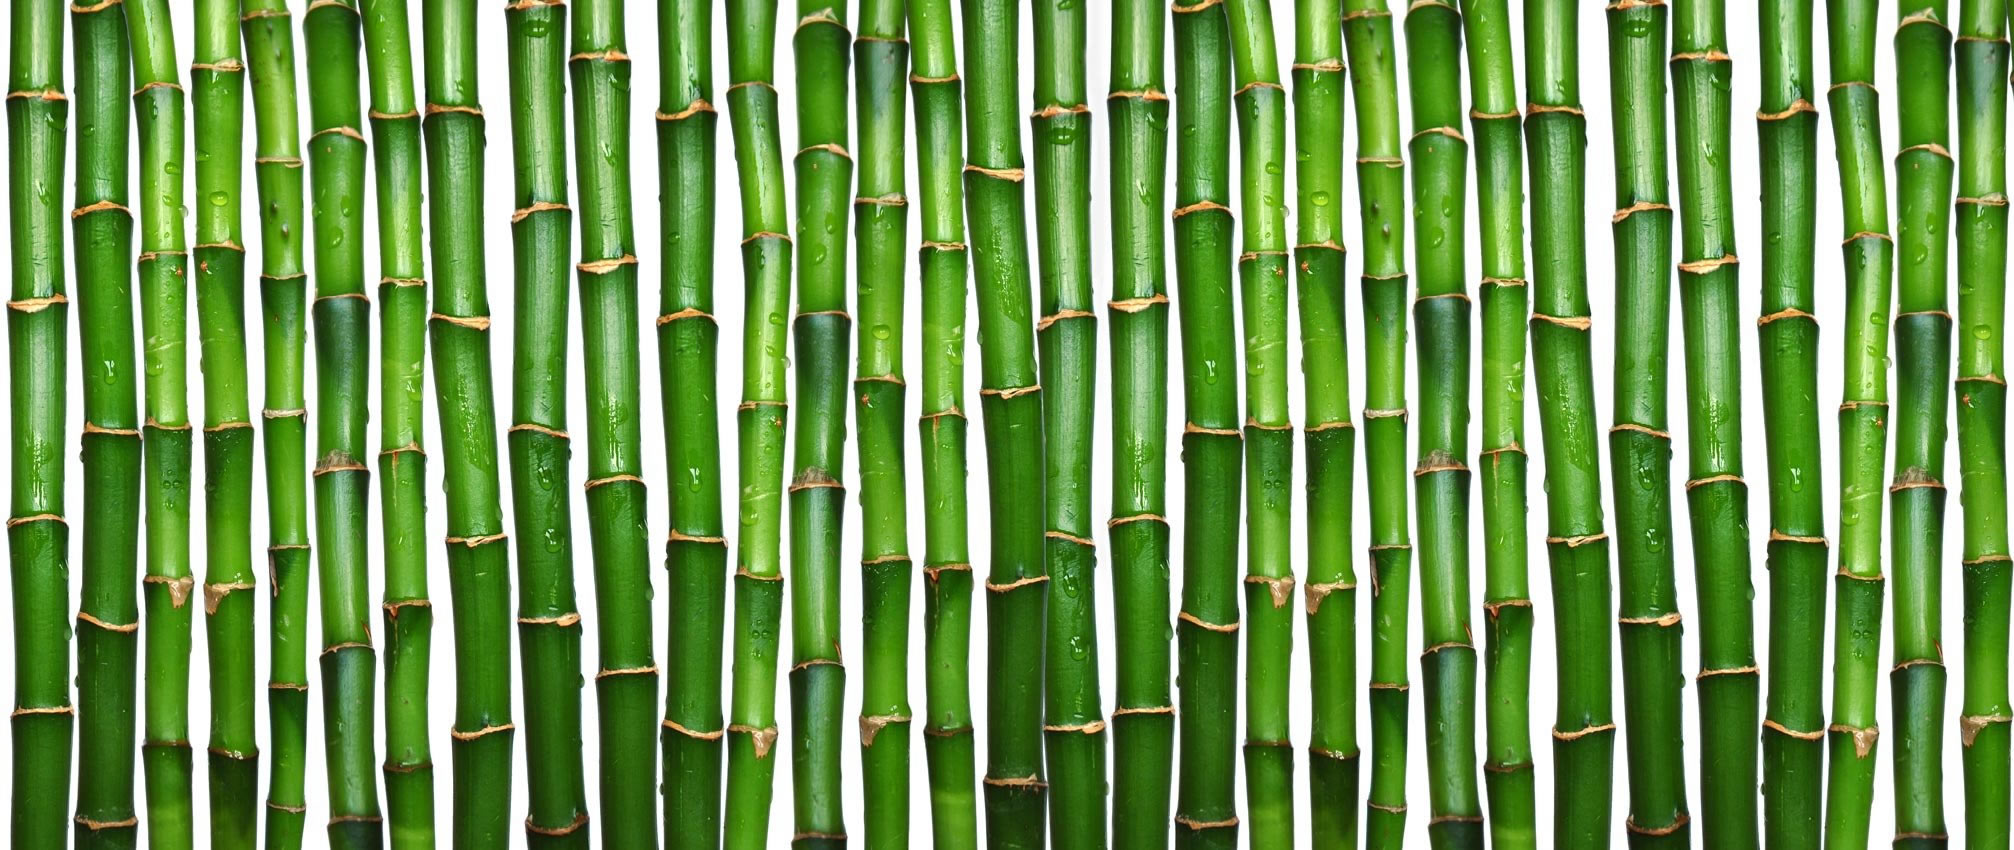 Download Texture  Green Bamboo Texture Bamboo  Green Bamboo Texture    